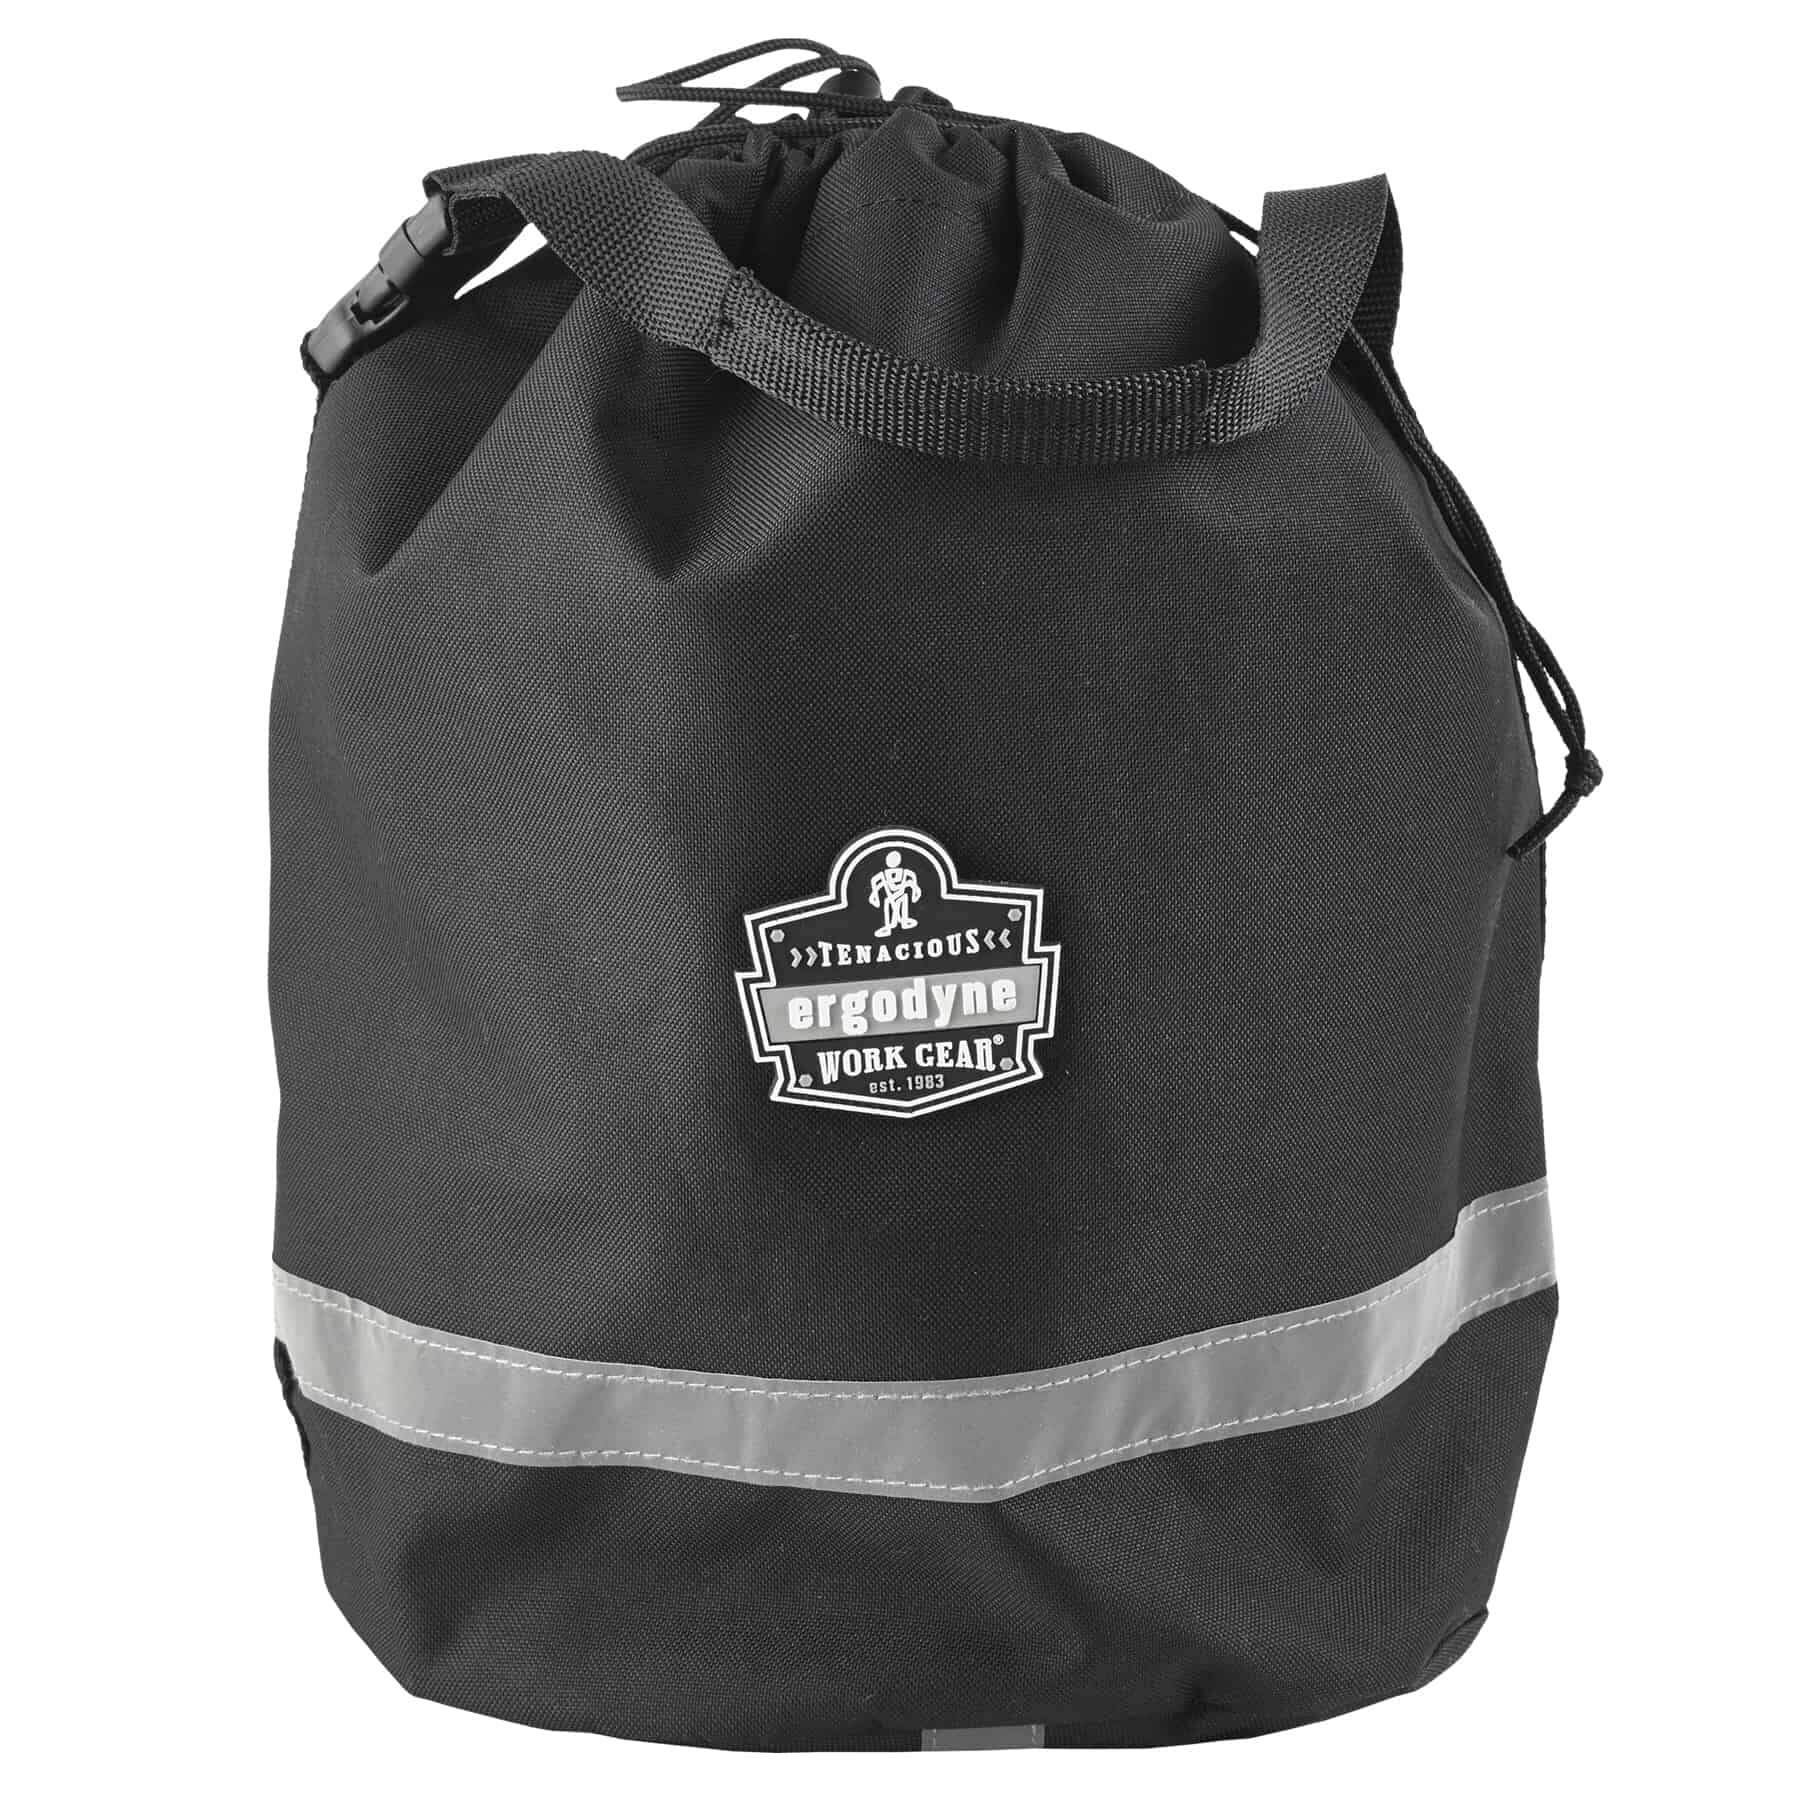 Ergodyne Arsenal 5130 Fall Protection Gear Bag Full Source